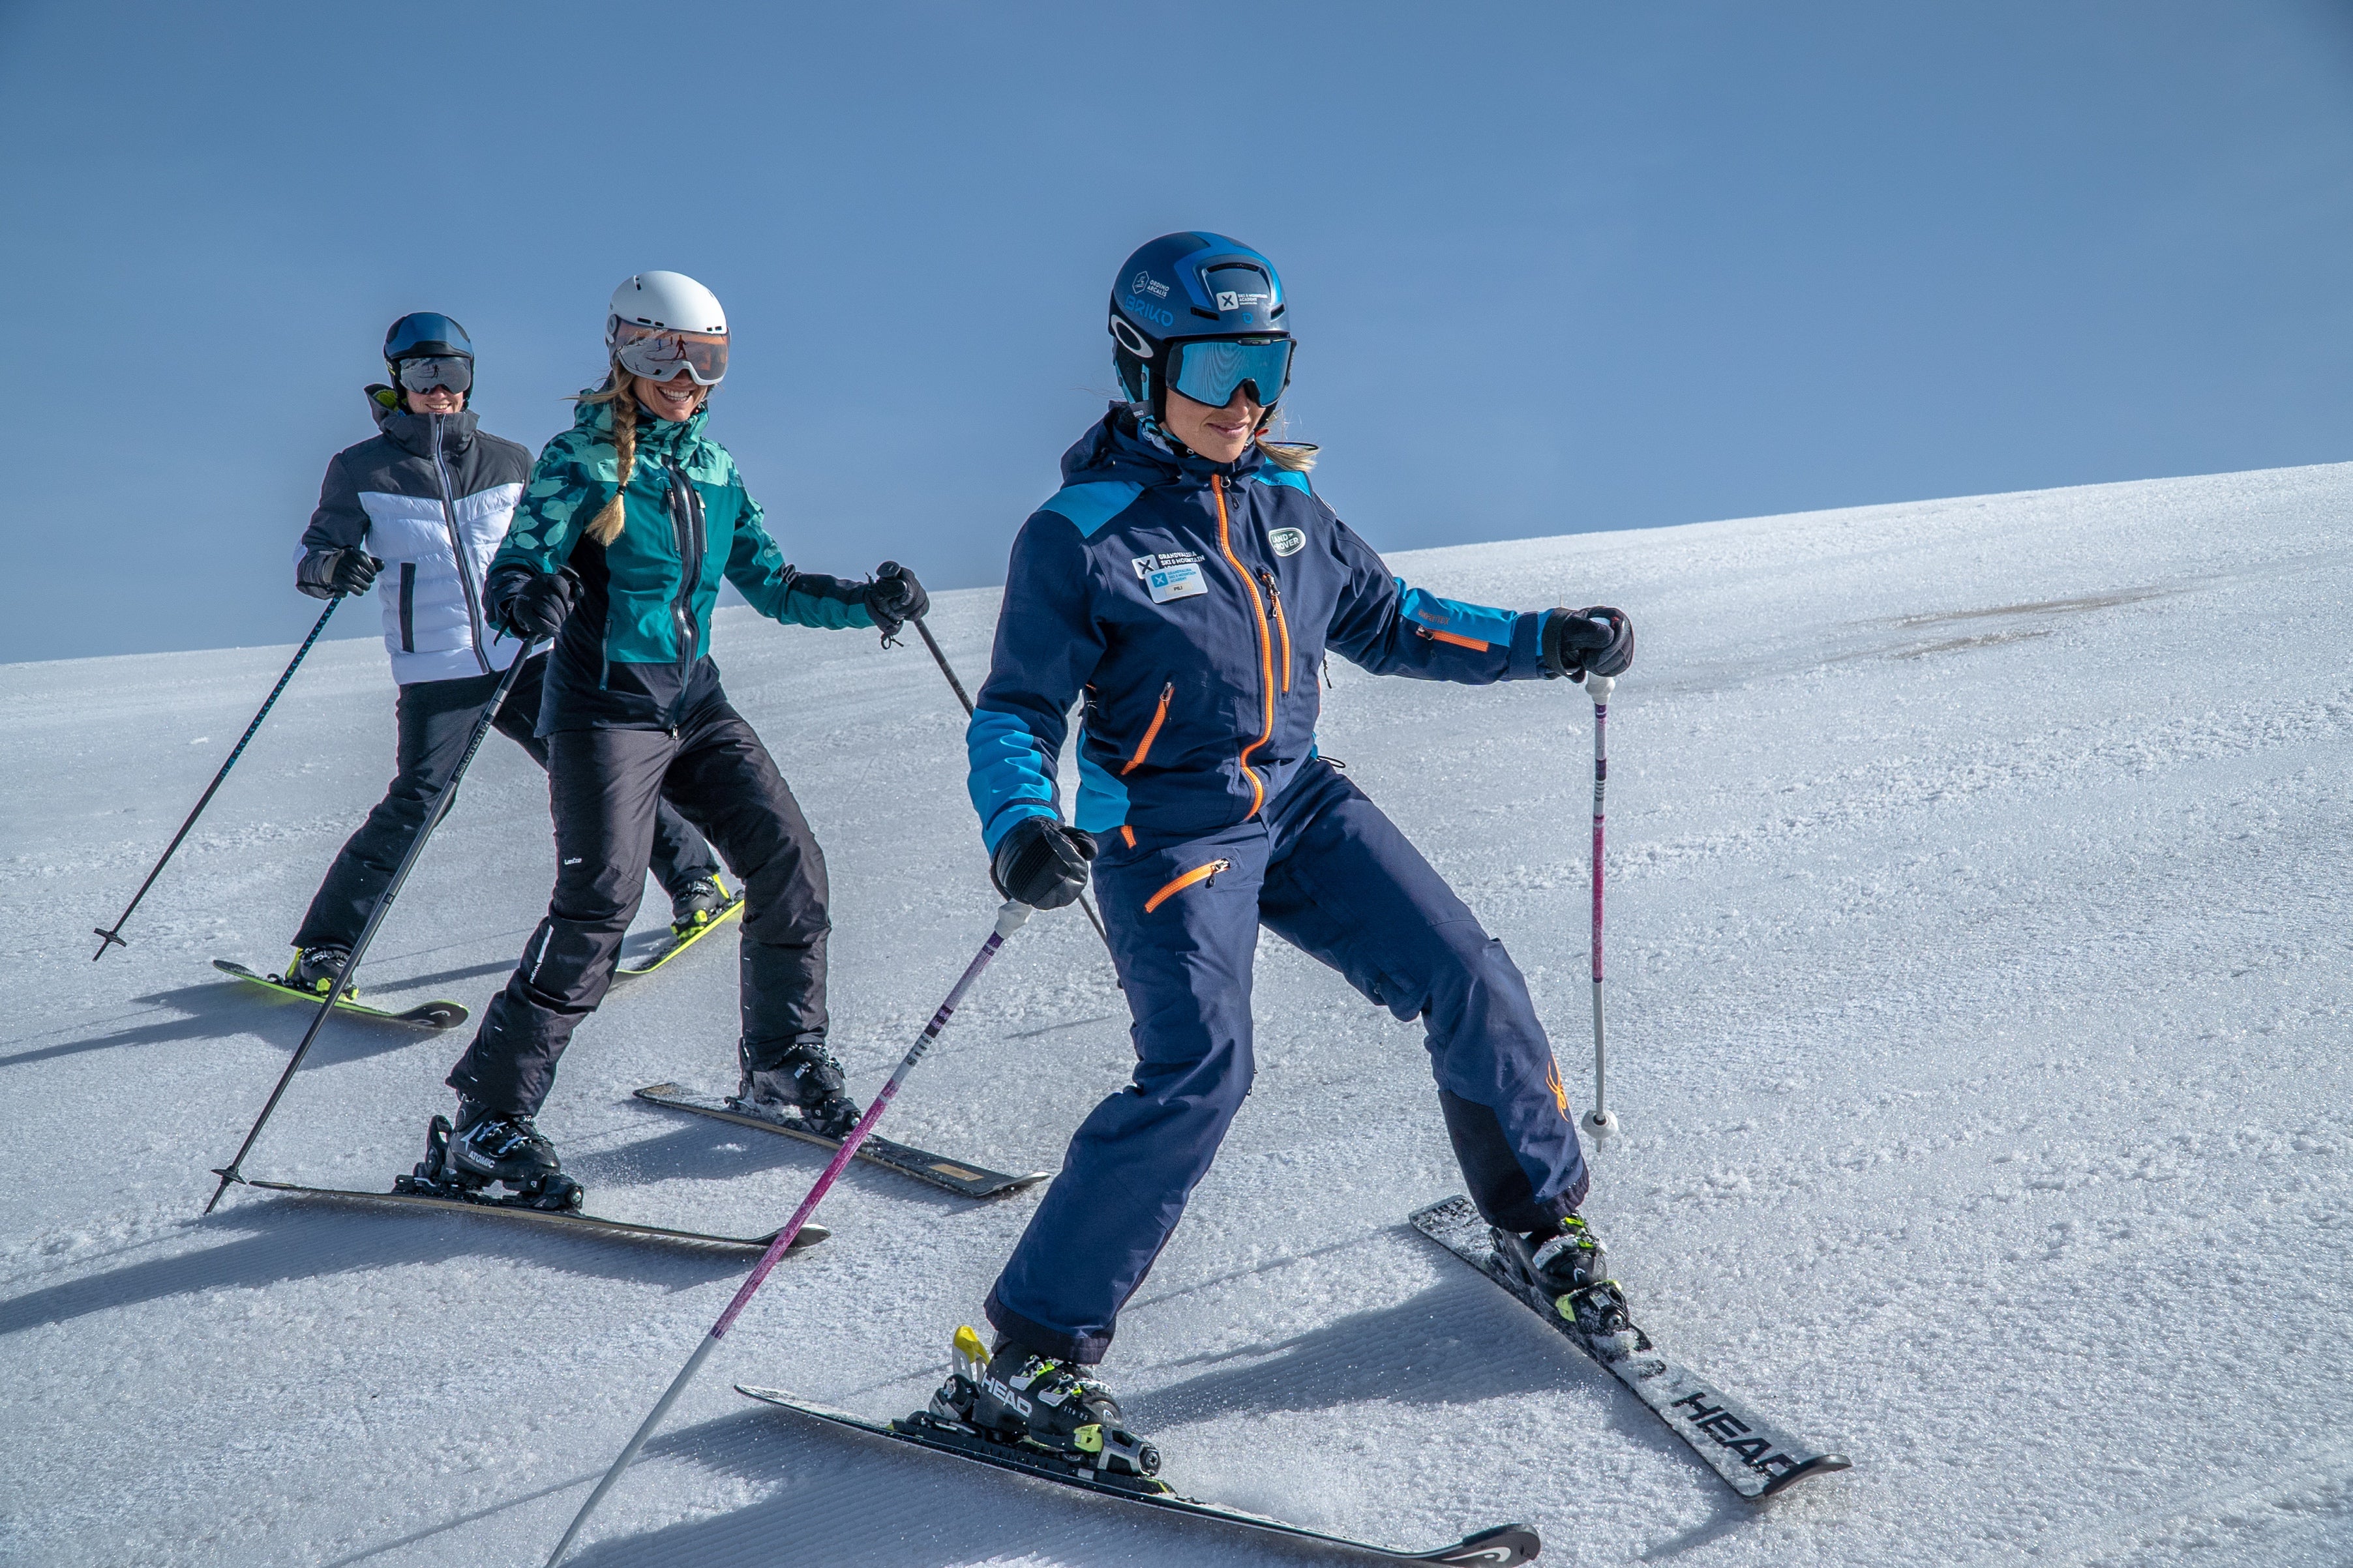 Arinsal Ski School has a great reputation for teaching beginners